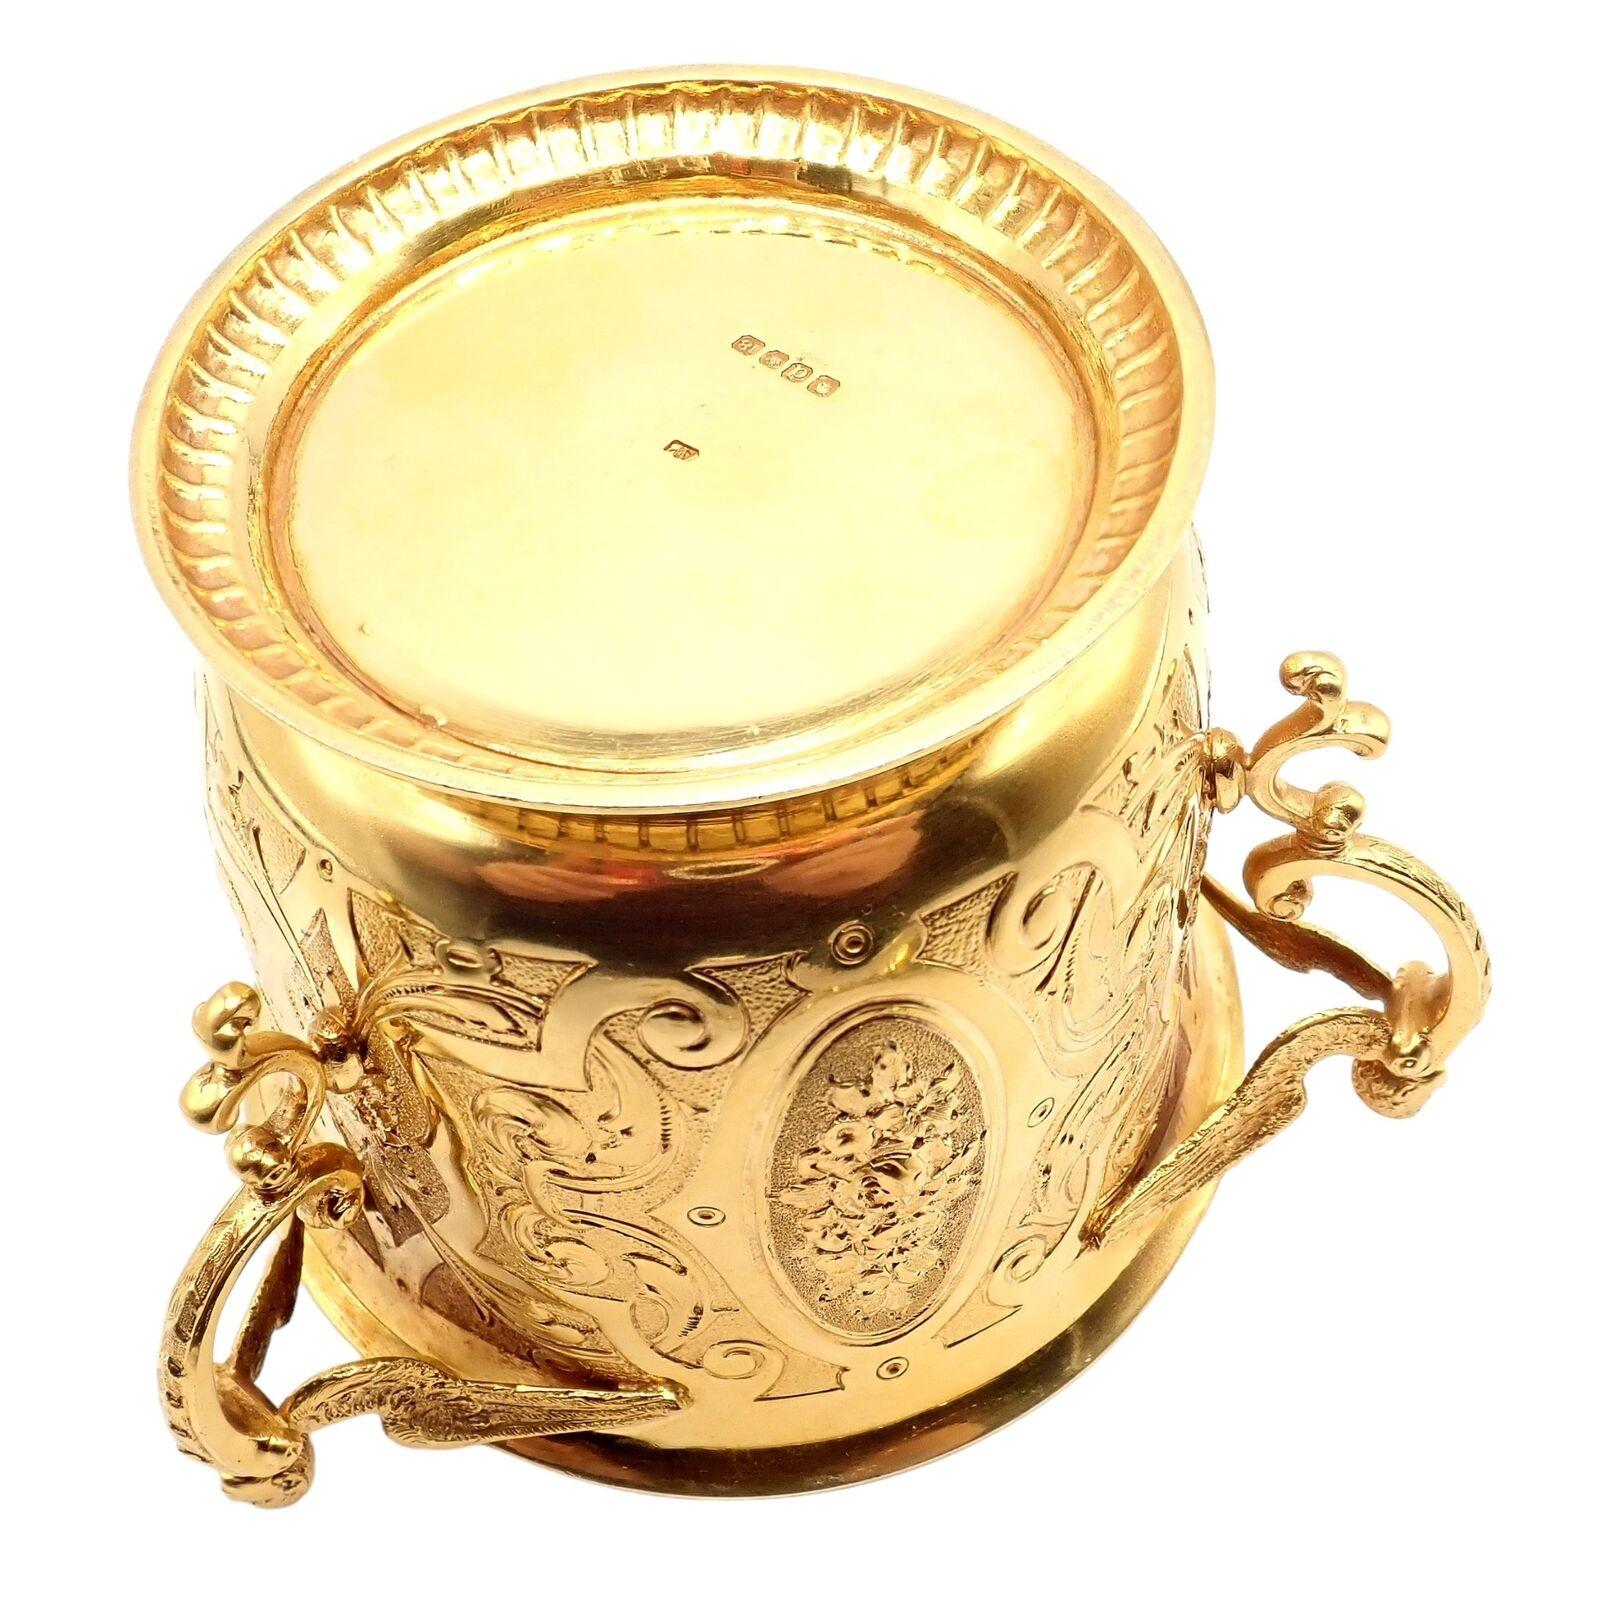 Antique Abraham Portal Sugar Bowl Dish Spoon Set Solid Yellow Gold circa 1779 For Sale 6